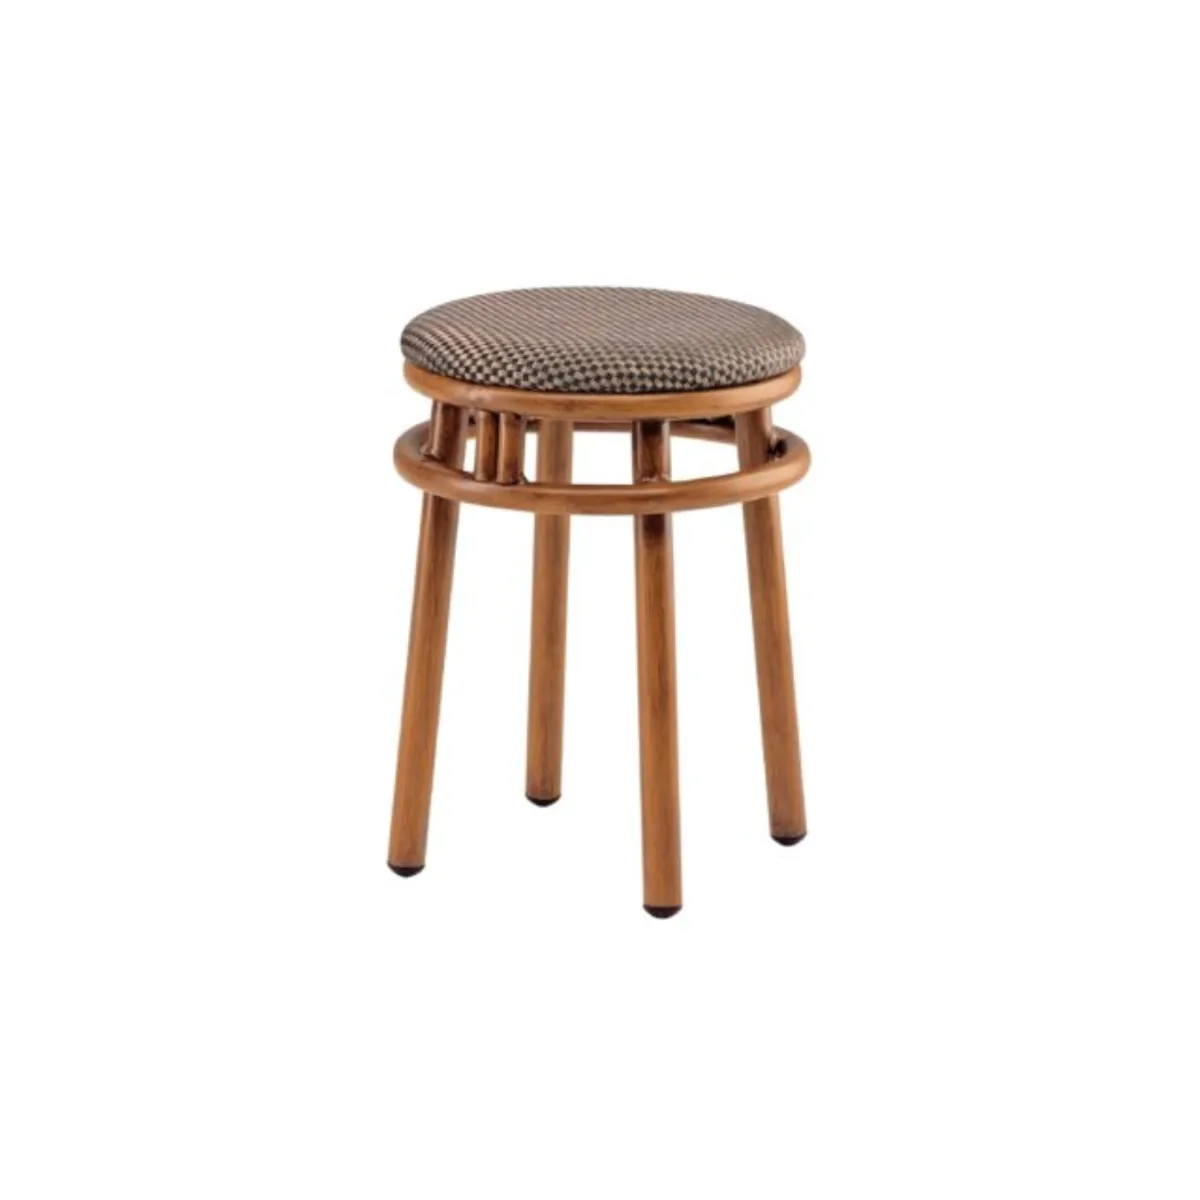 Ellery low stool